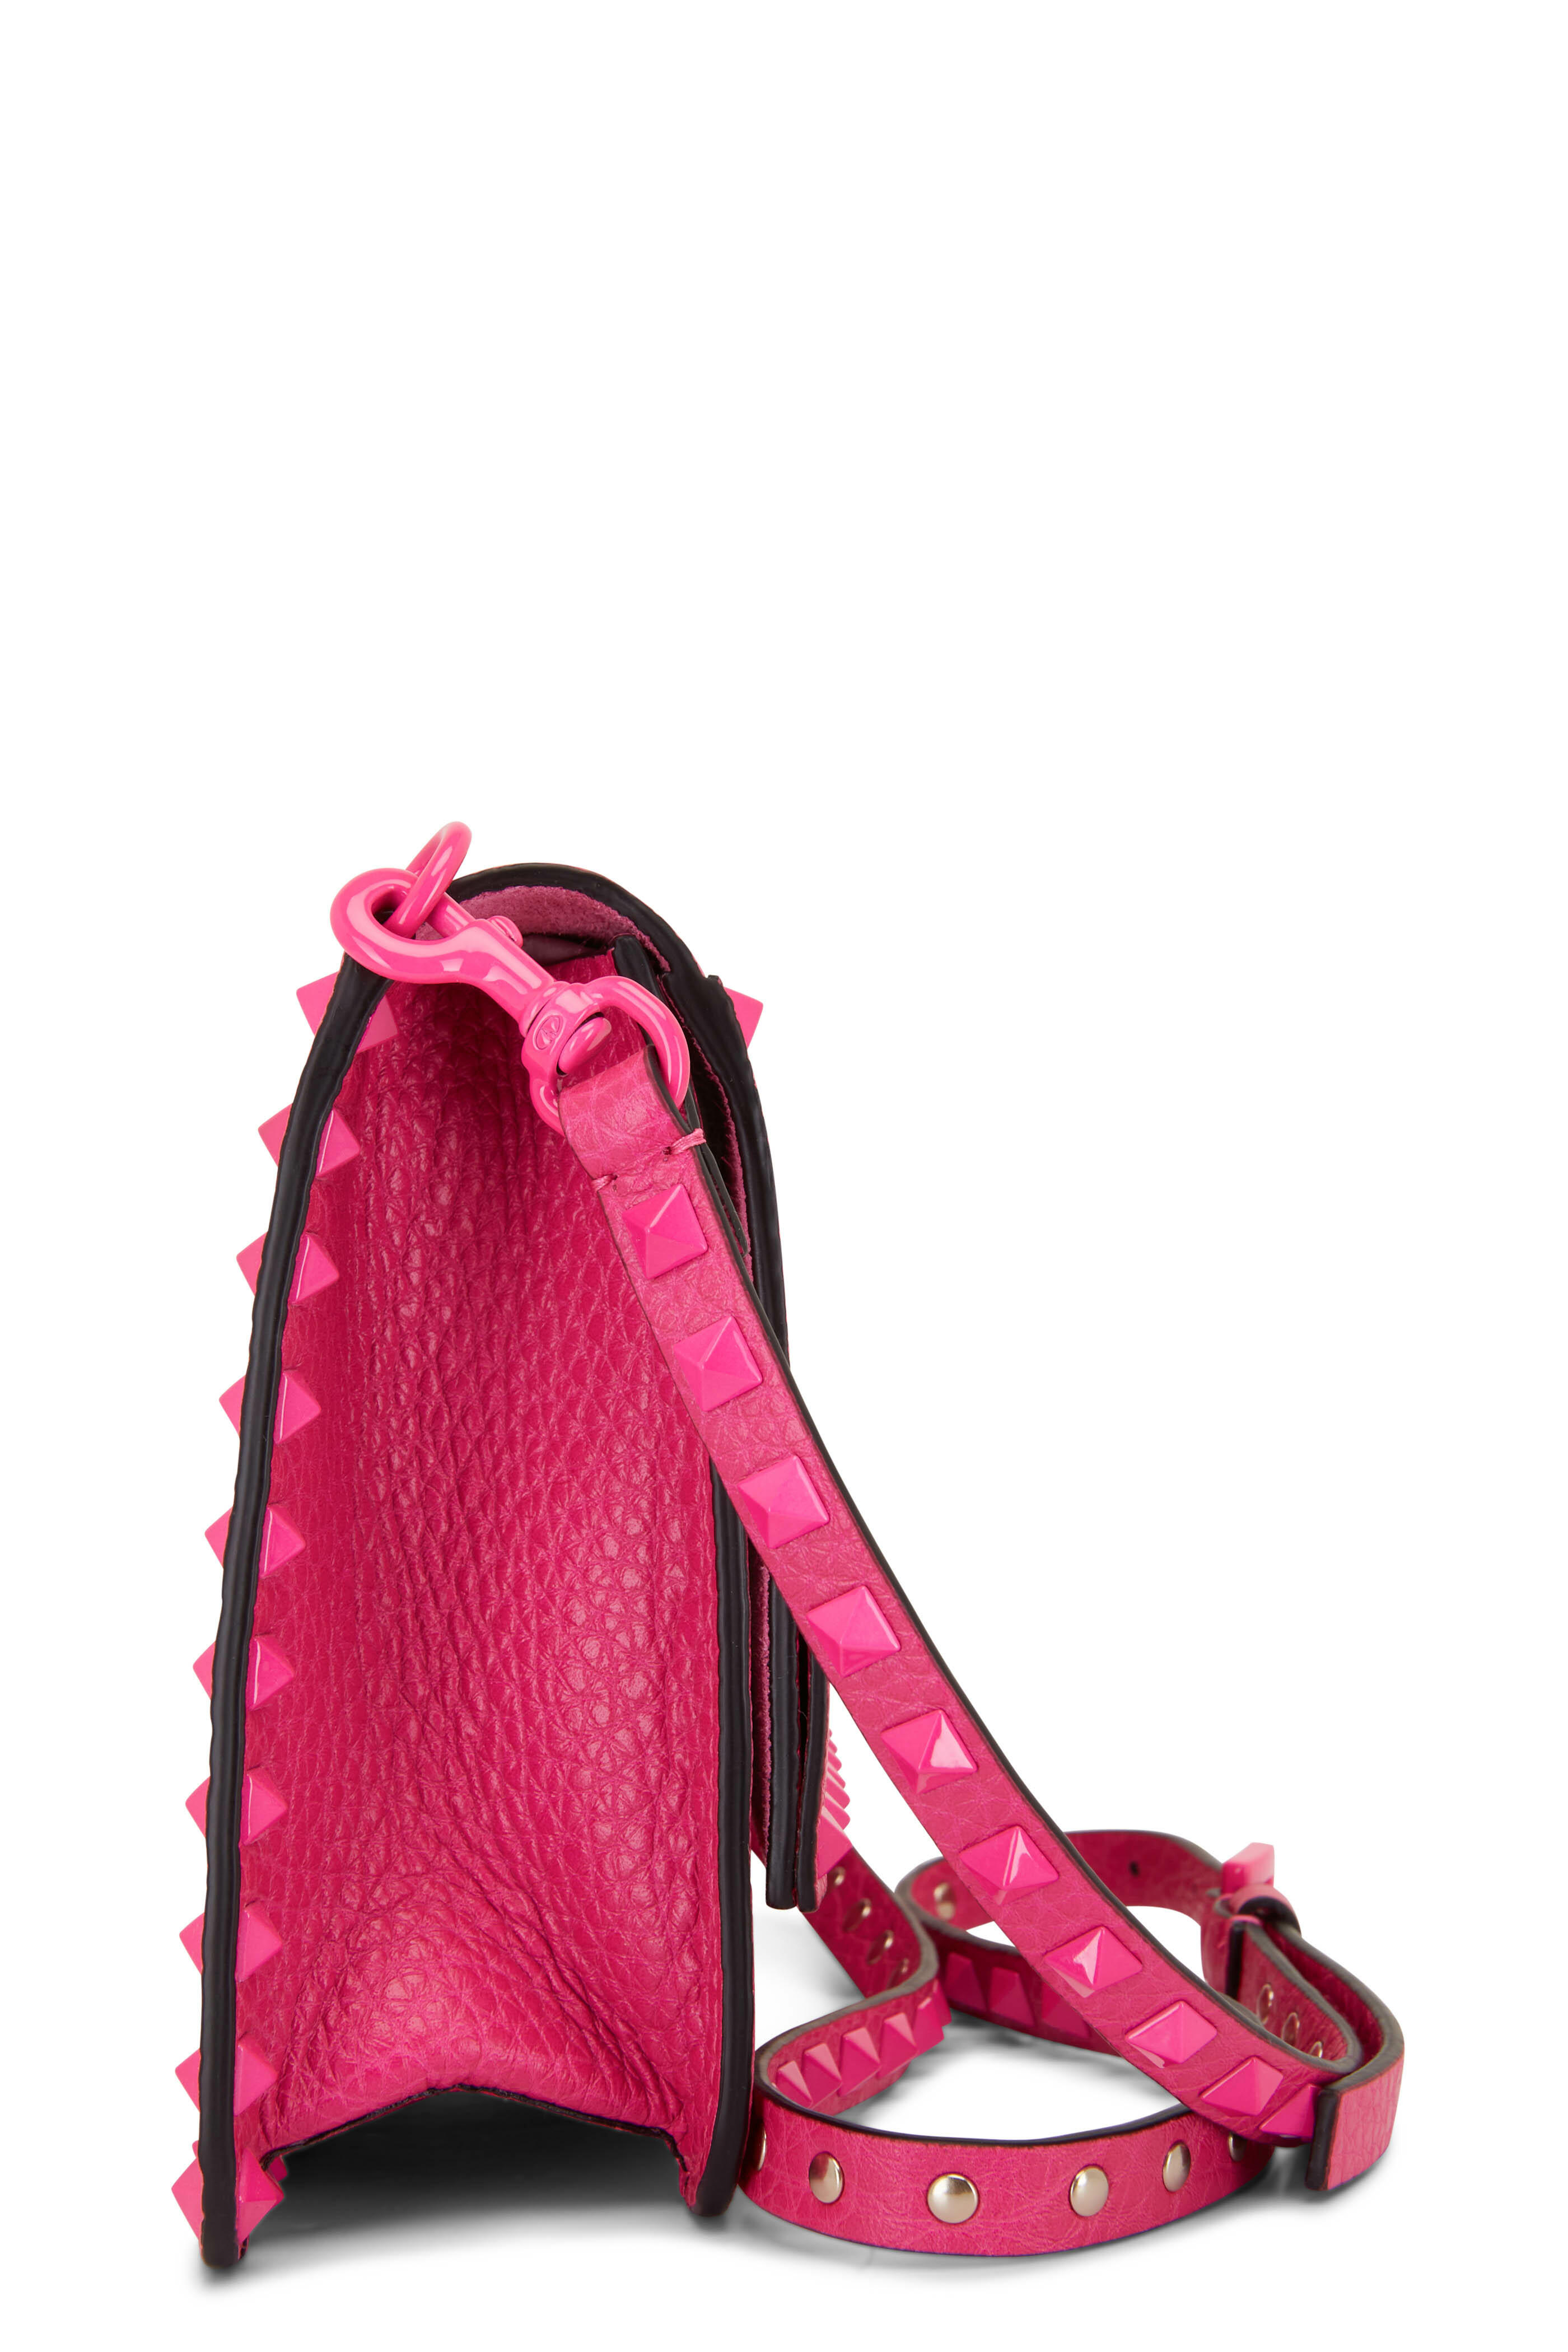 Valentino Pink/Black Leather Rockstud Camera Bag at 1stDibs